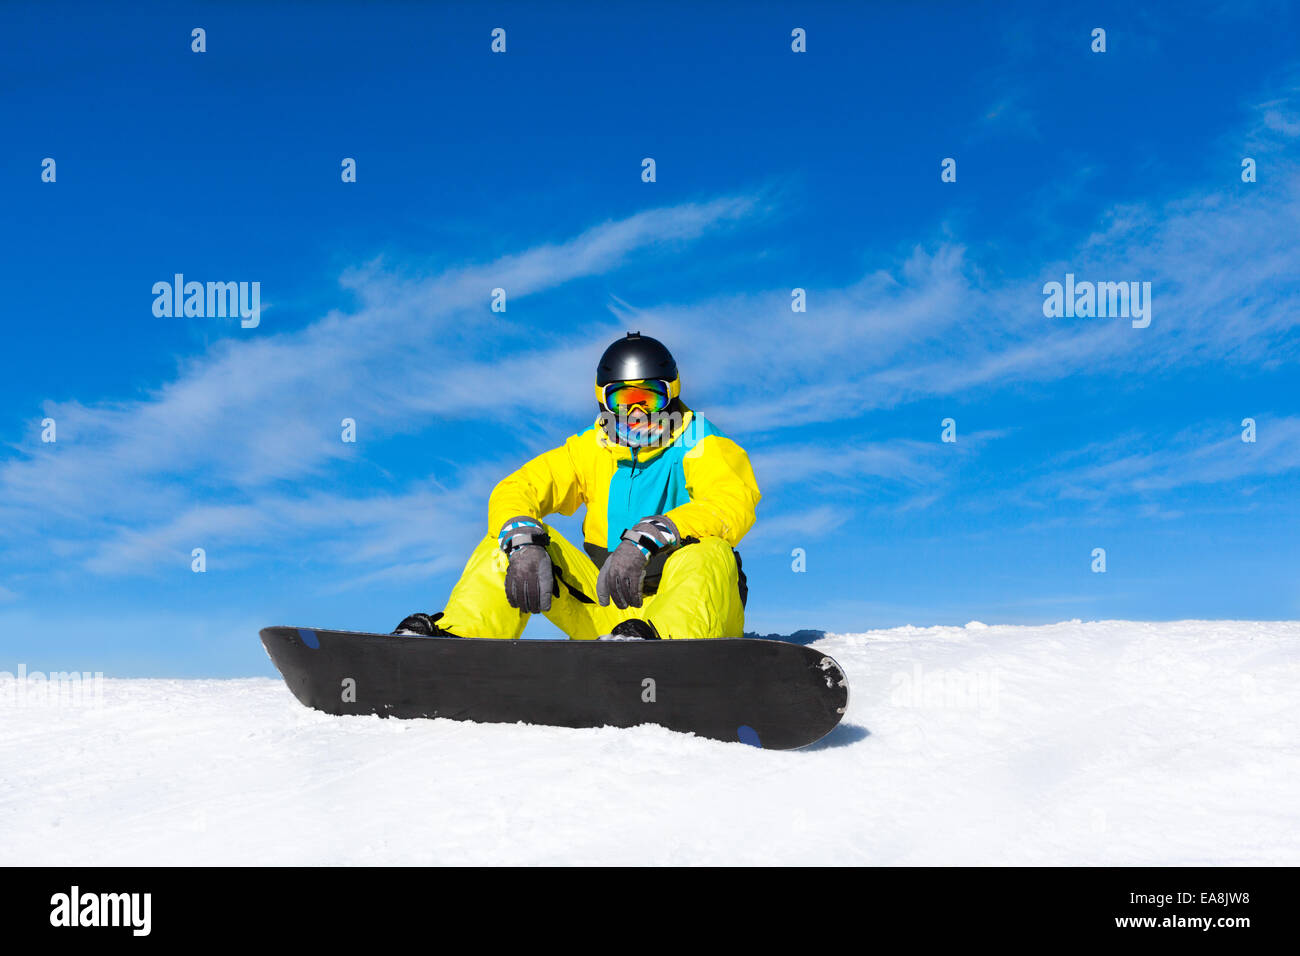 snowboarder sitting on snow mountain slope Stock Photo